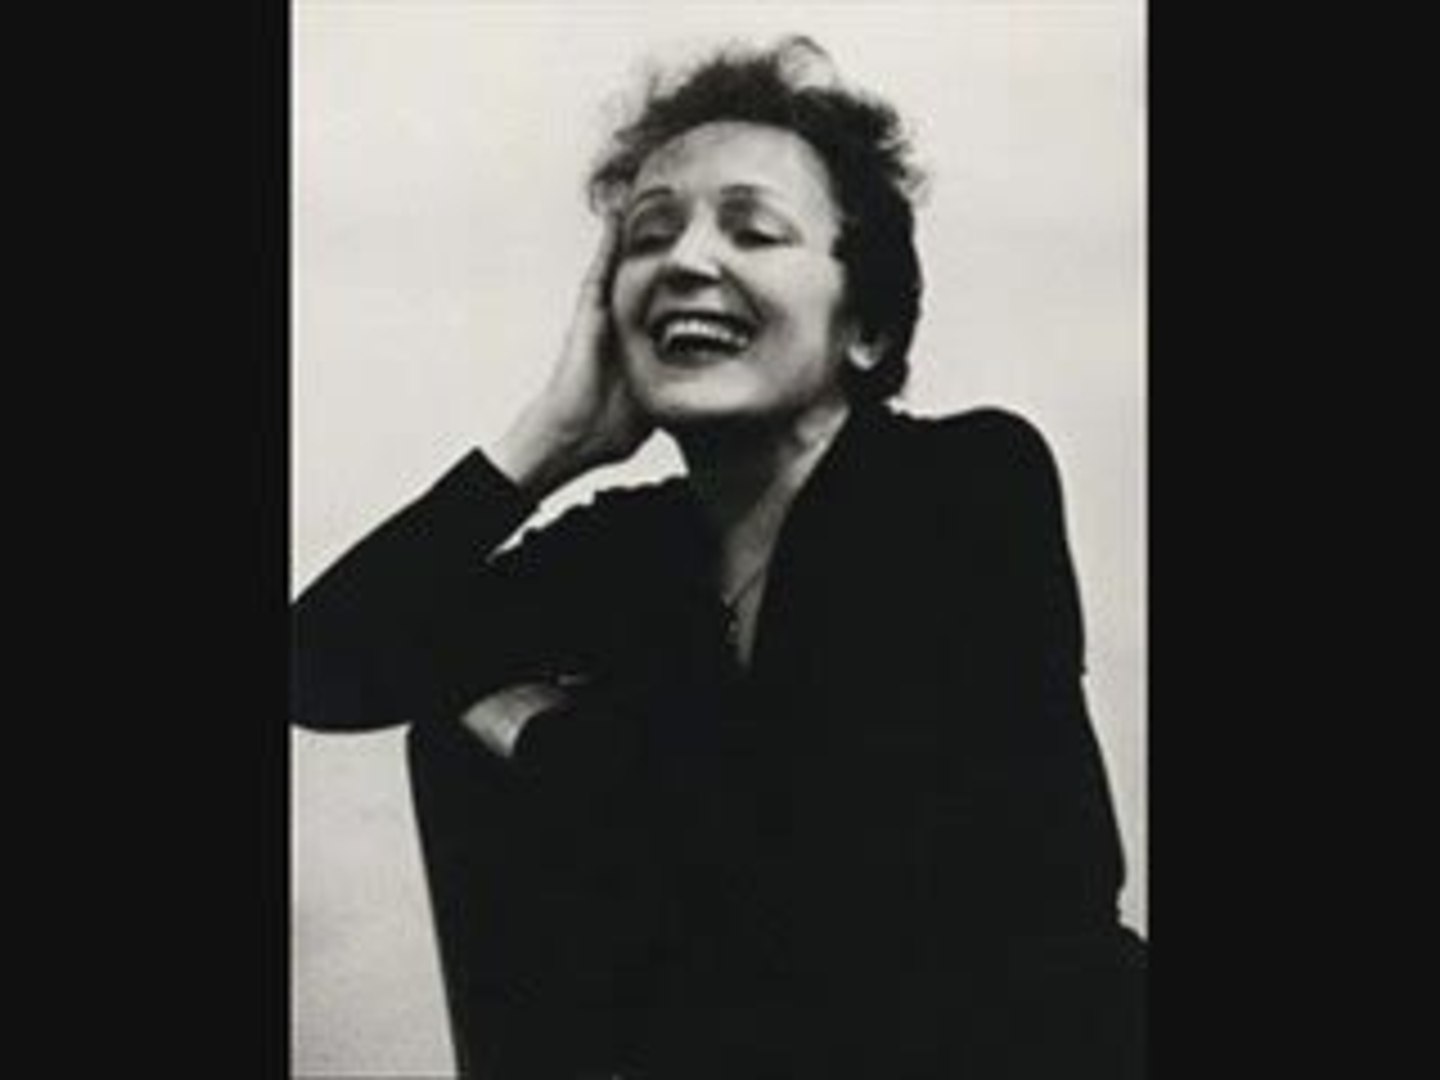 Edith Piaf-Je Ne Veux Pas Travailler - video Dailymotion